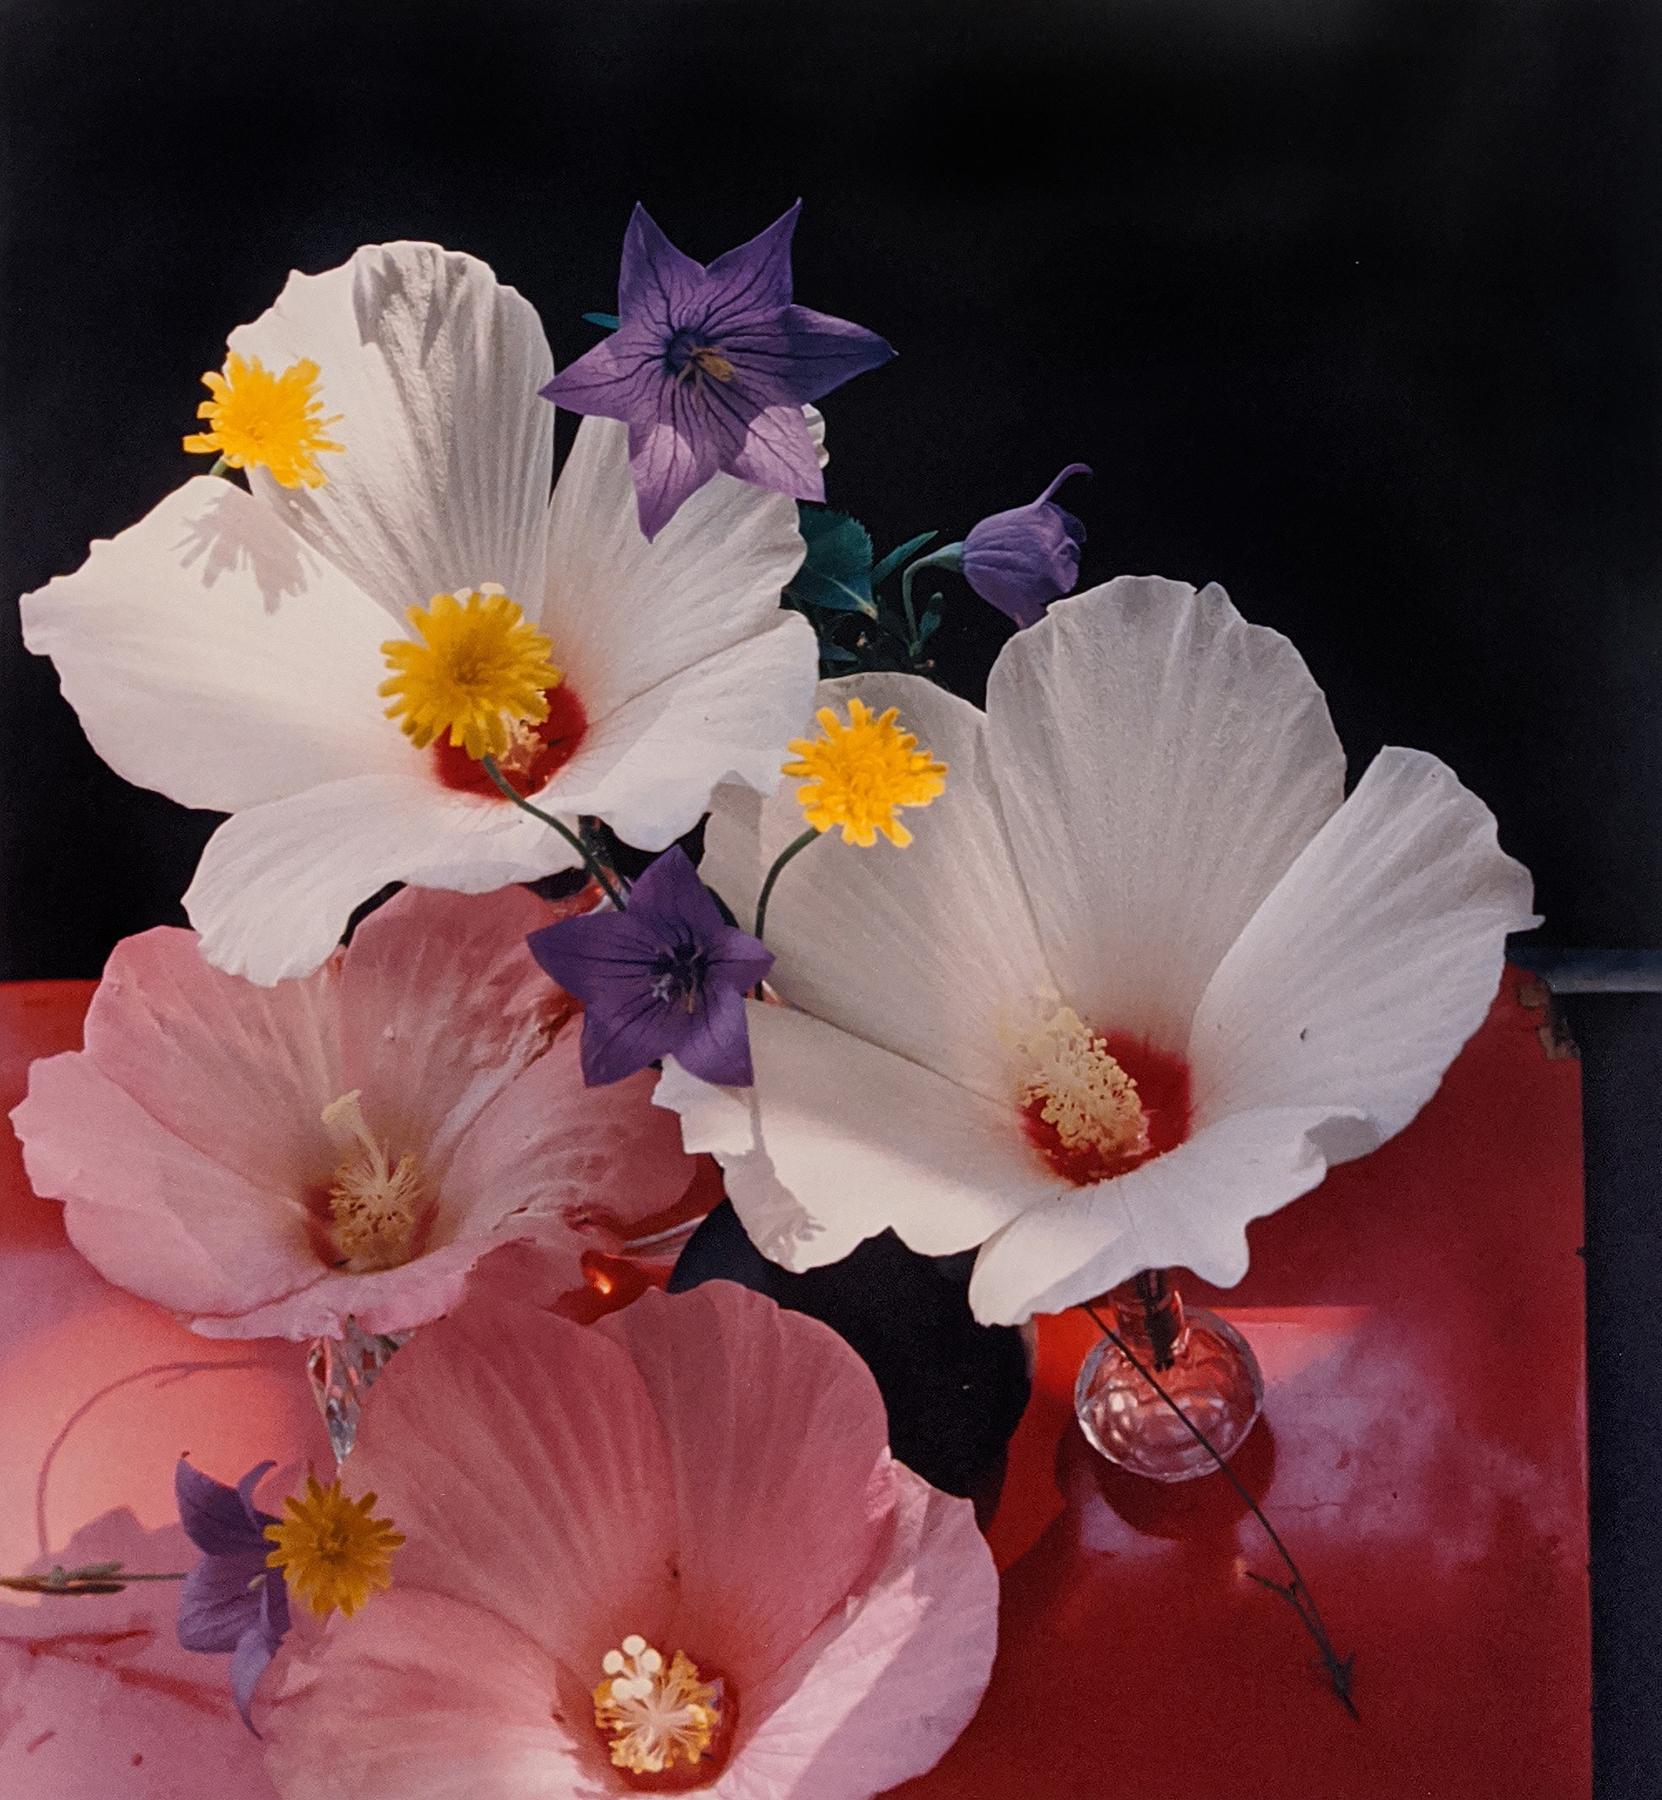 Horst P. Horst Color Photograph - Hybiscus Platycum, c. 1985